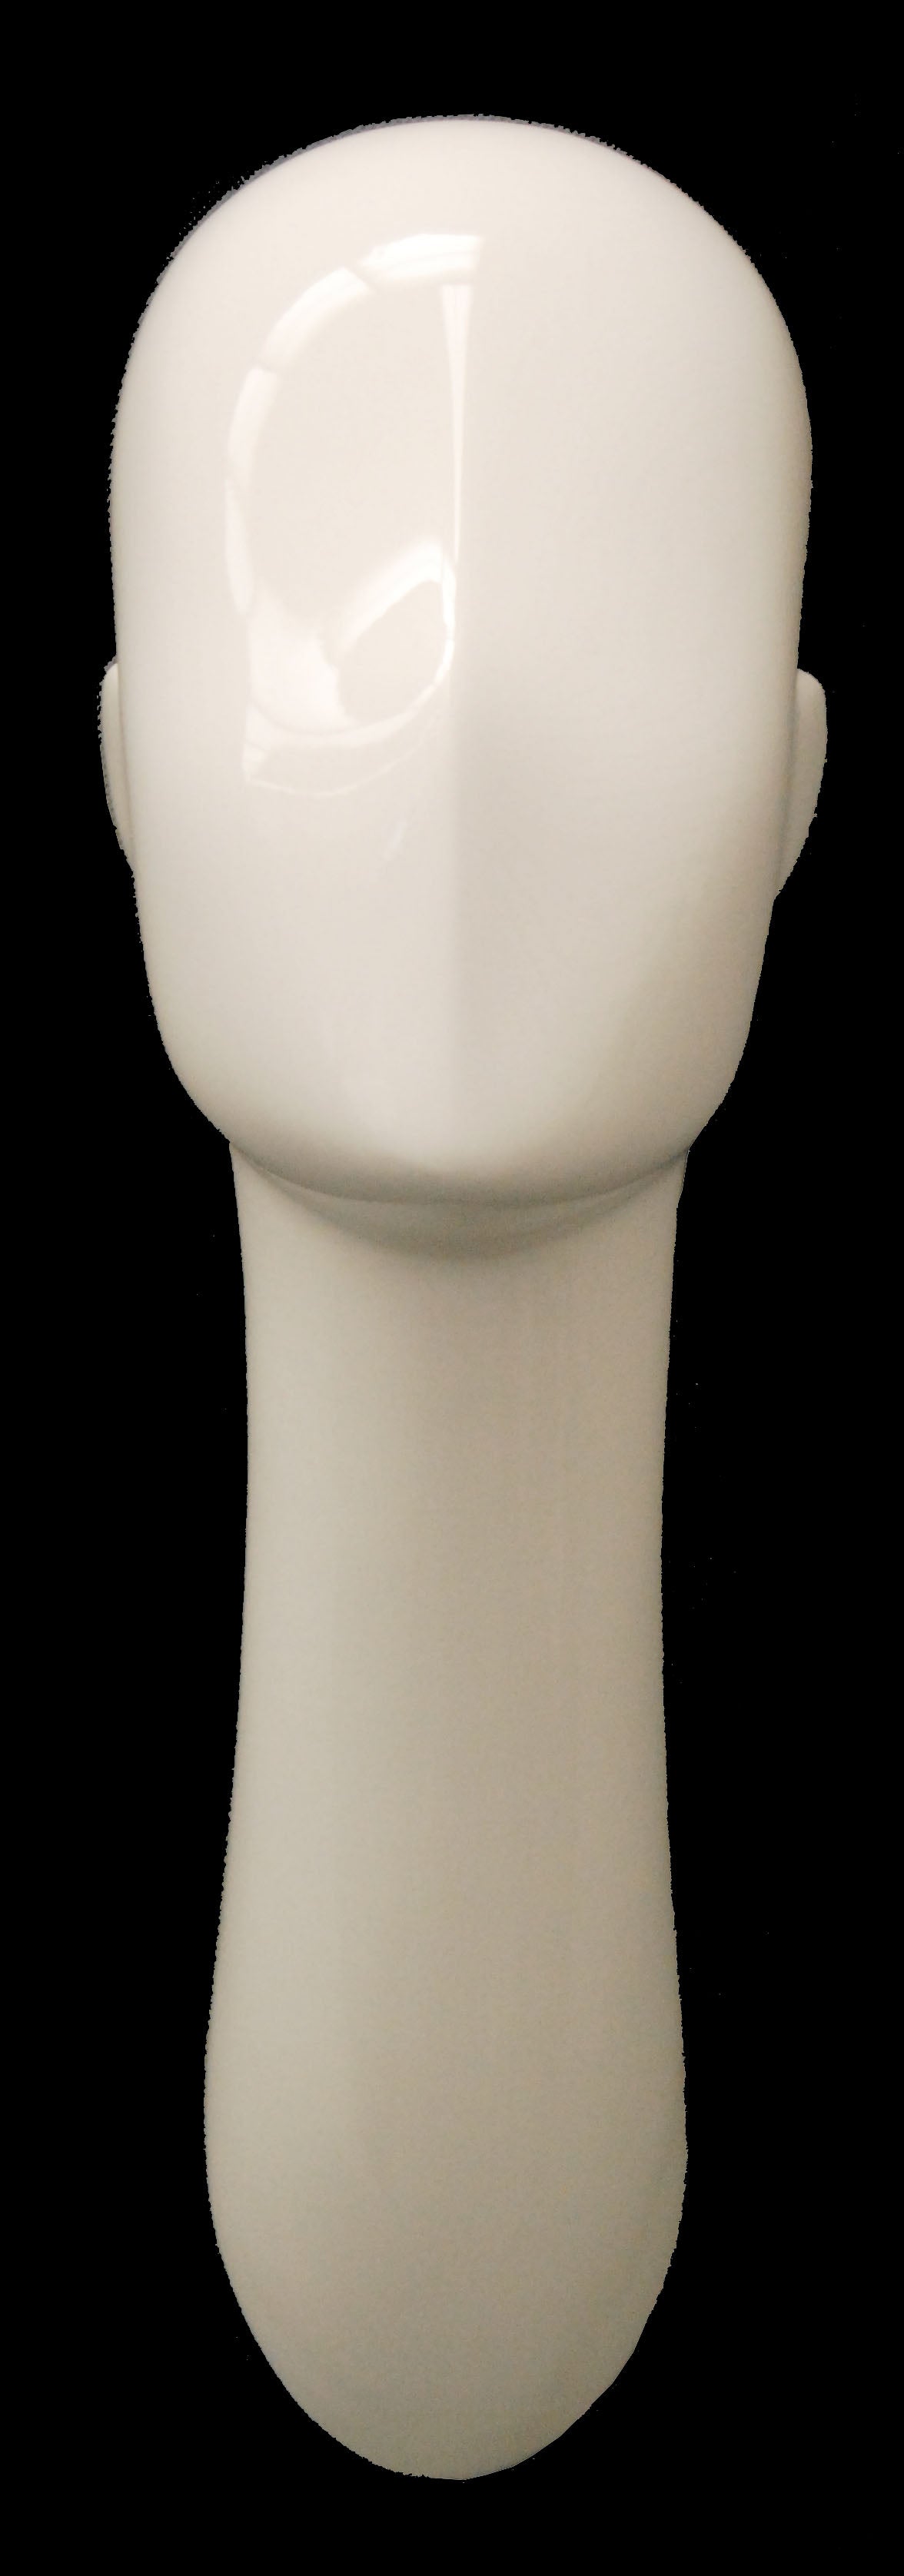 Styrofoam Male Head - Las Vegas Mannequins